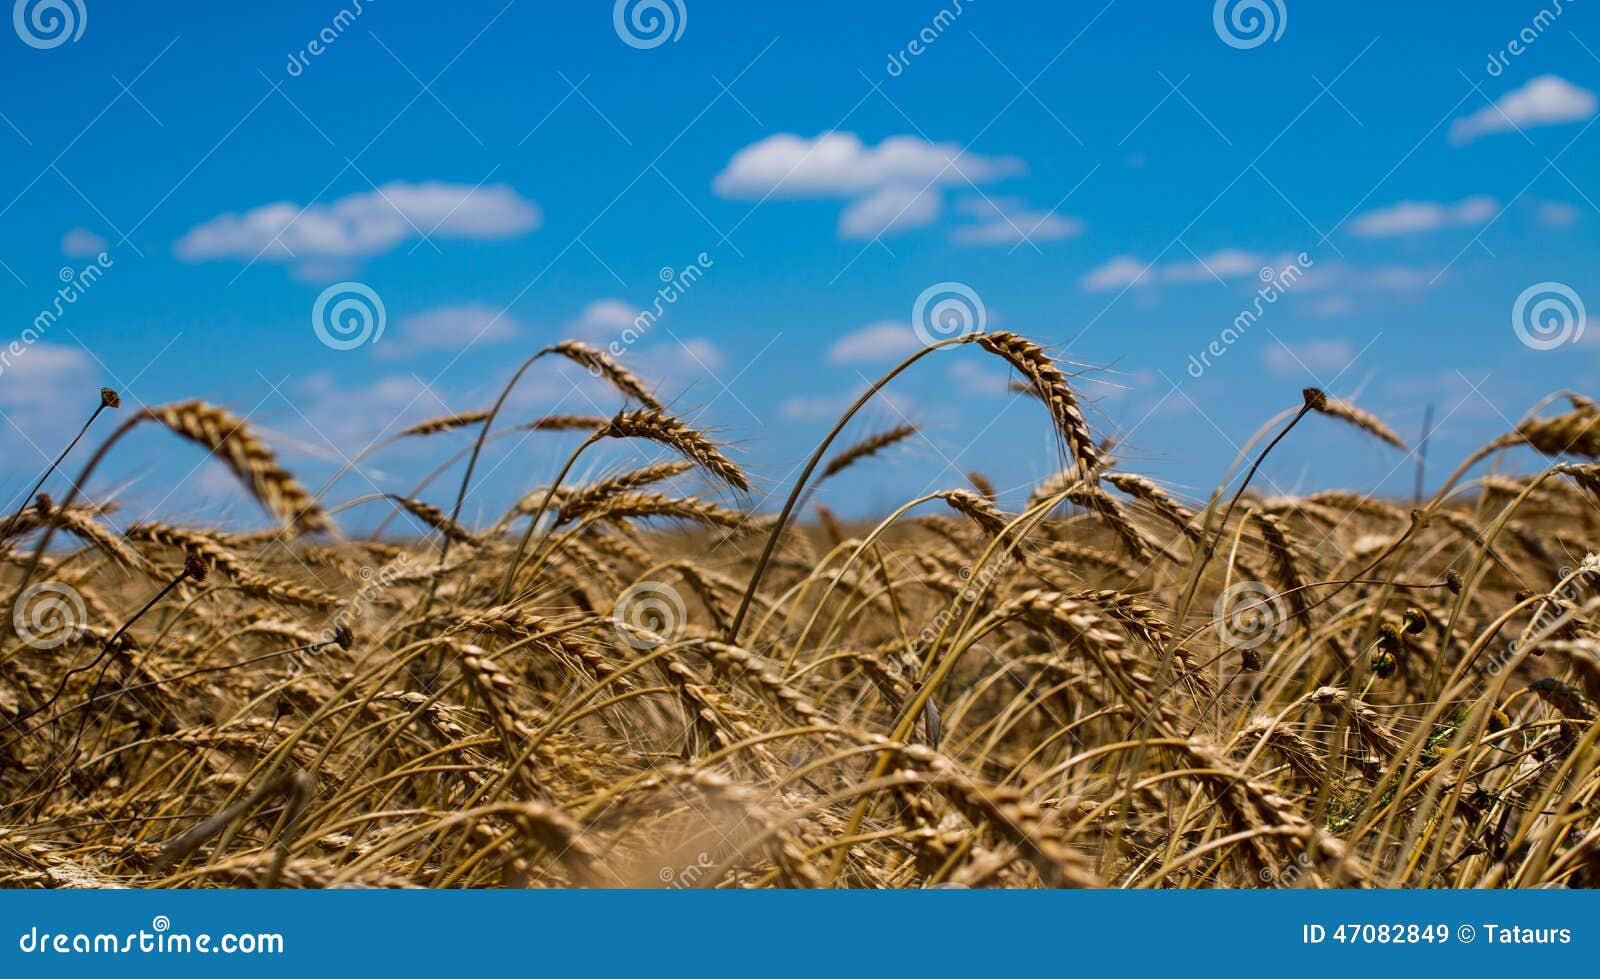 Wheat field. Field of ripe wheat over cloudy sky.